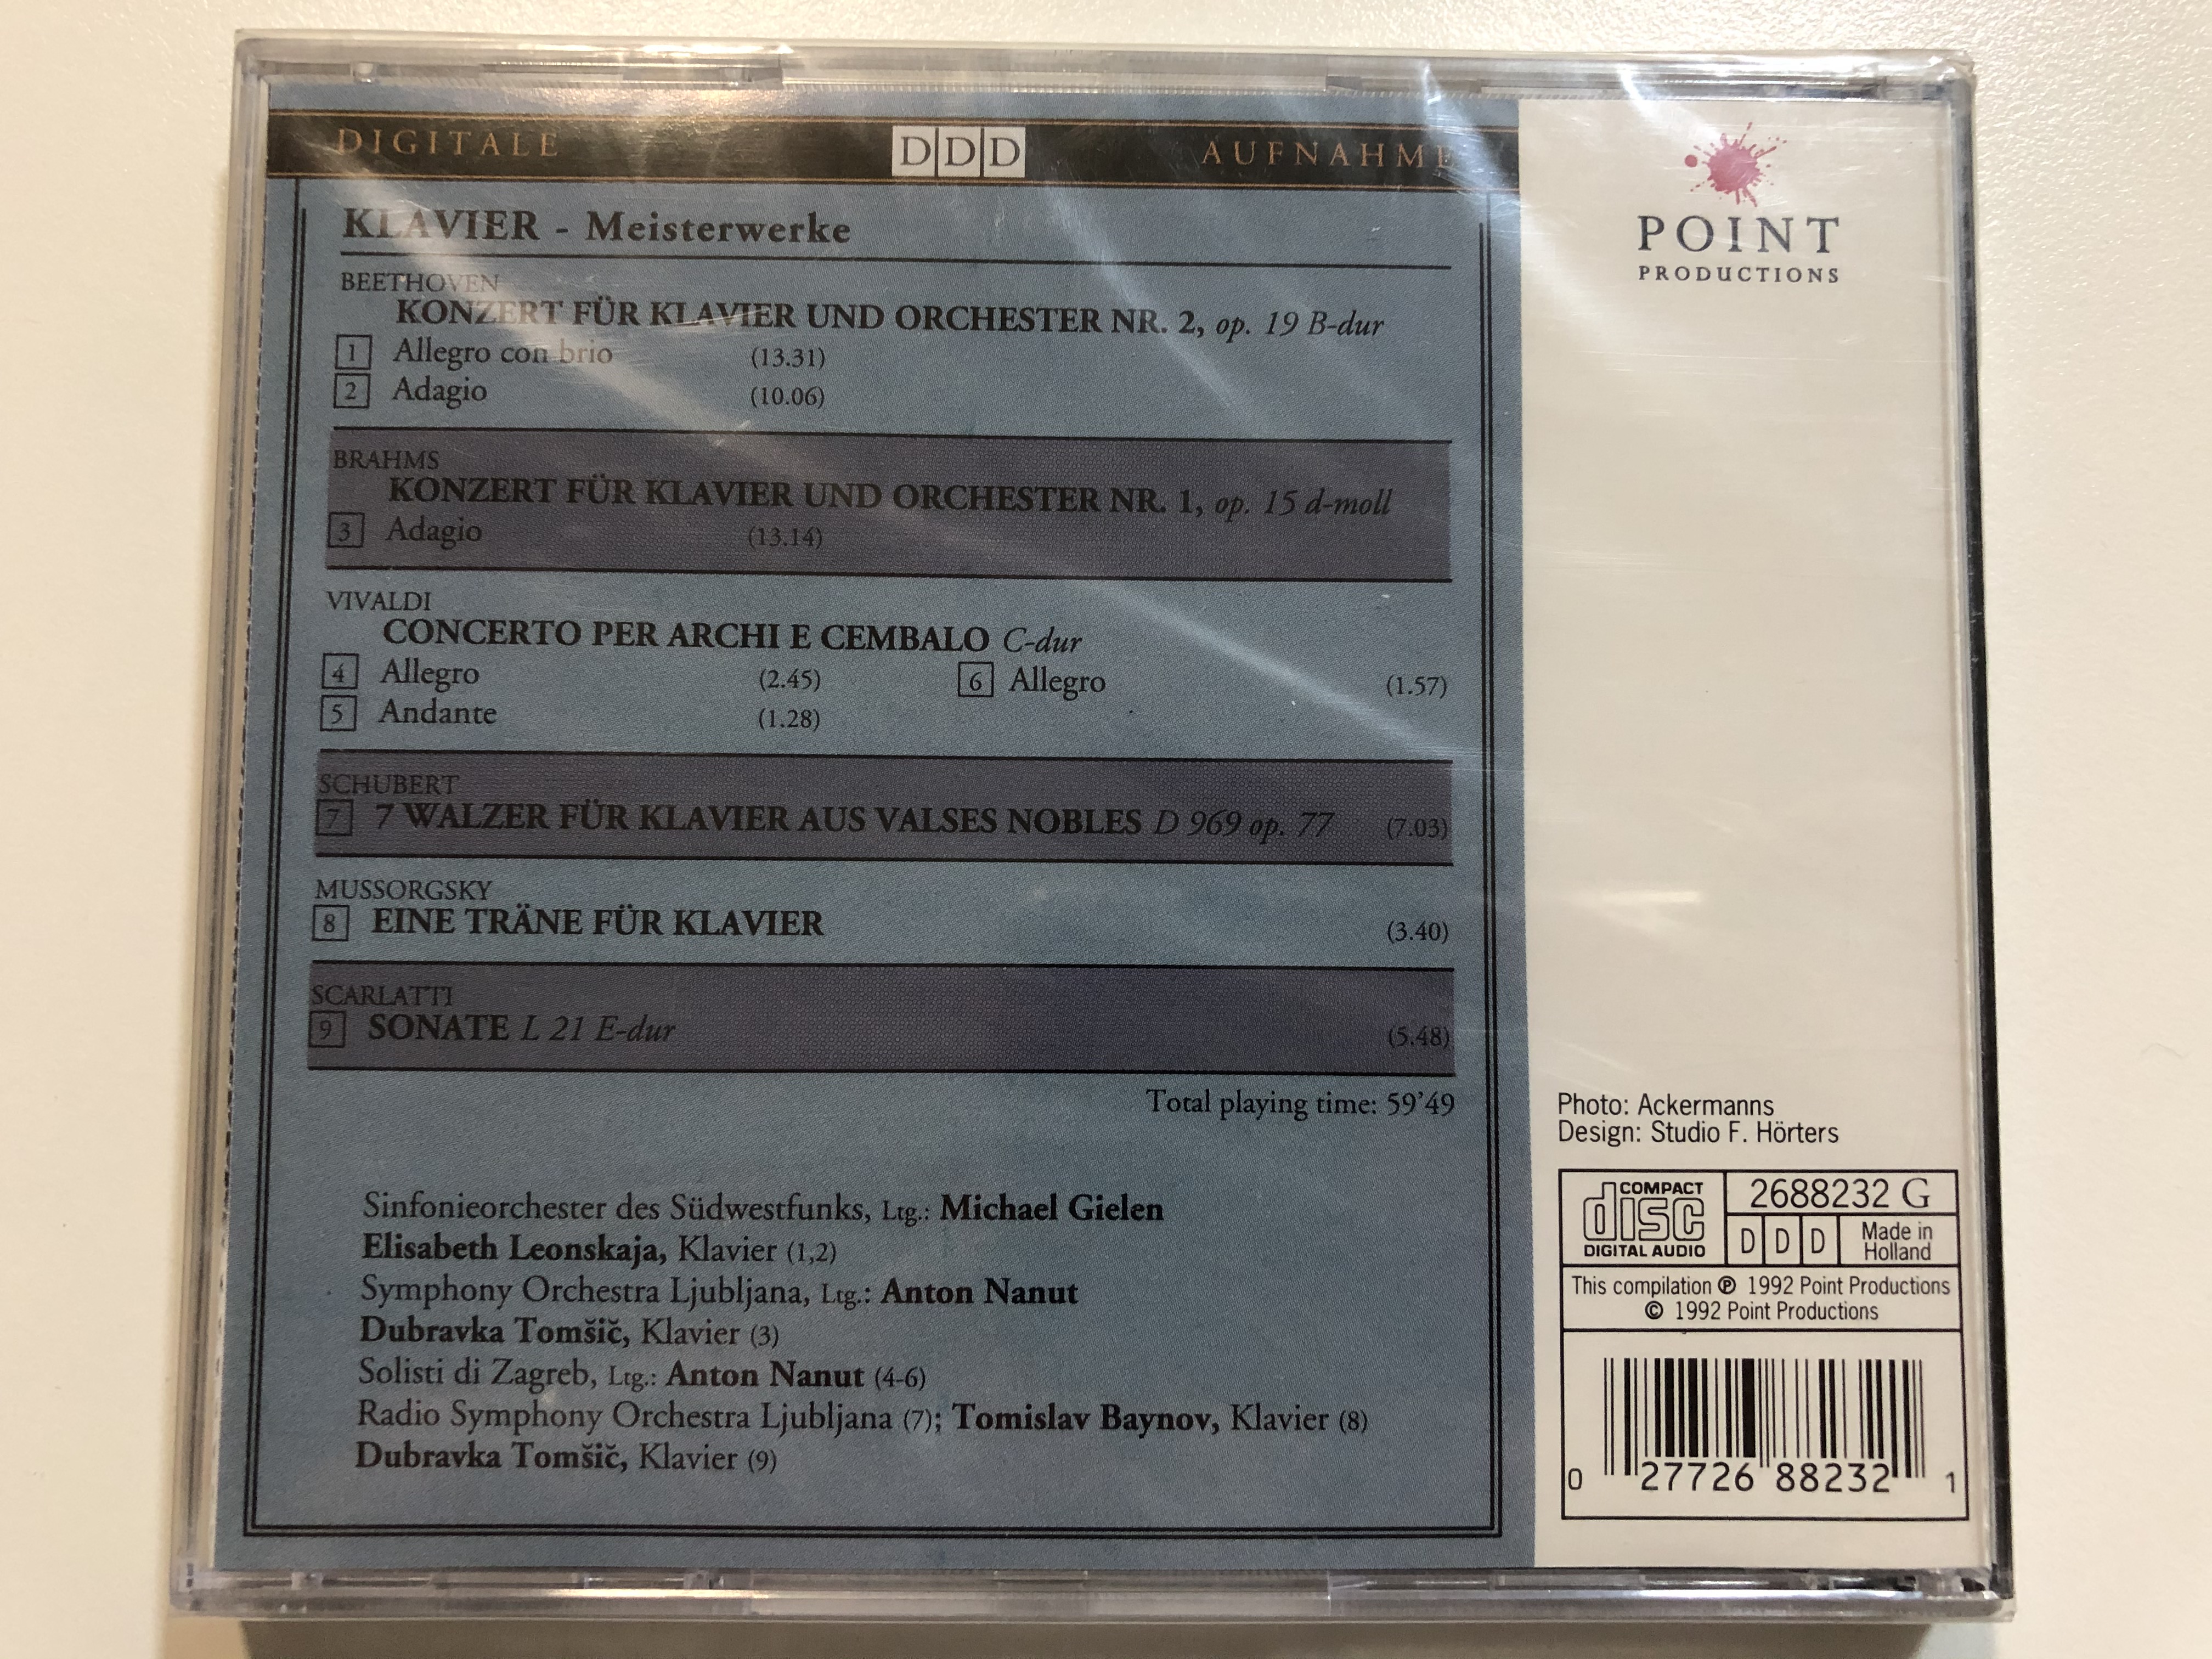 klavier-meisterwerke-konzert-nr.-i-2-fur-klavier-und-orchester-concerto-per-archi-e-cembalo-7-walzer-aus-valses-nobles-eine-trane-fur-klavier-sonata-point-productions-audio-cd-1992-.jpg